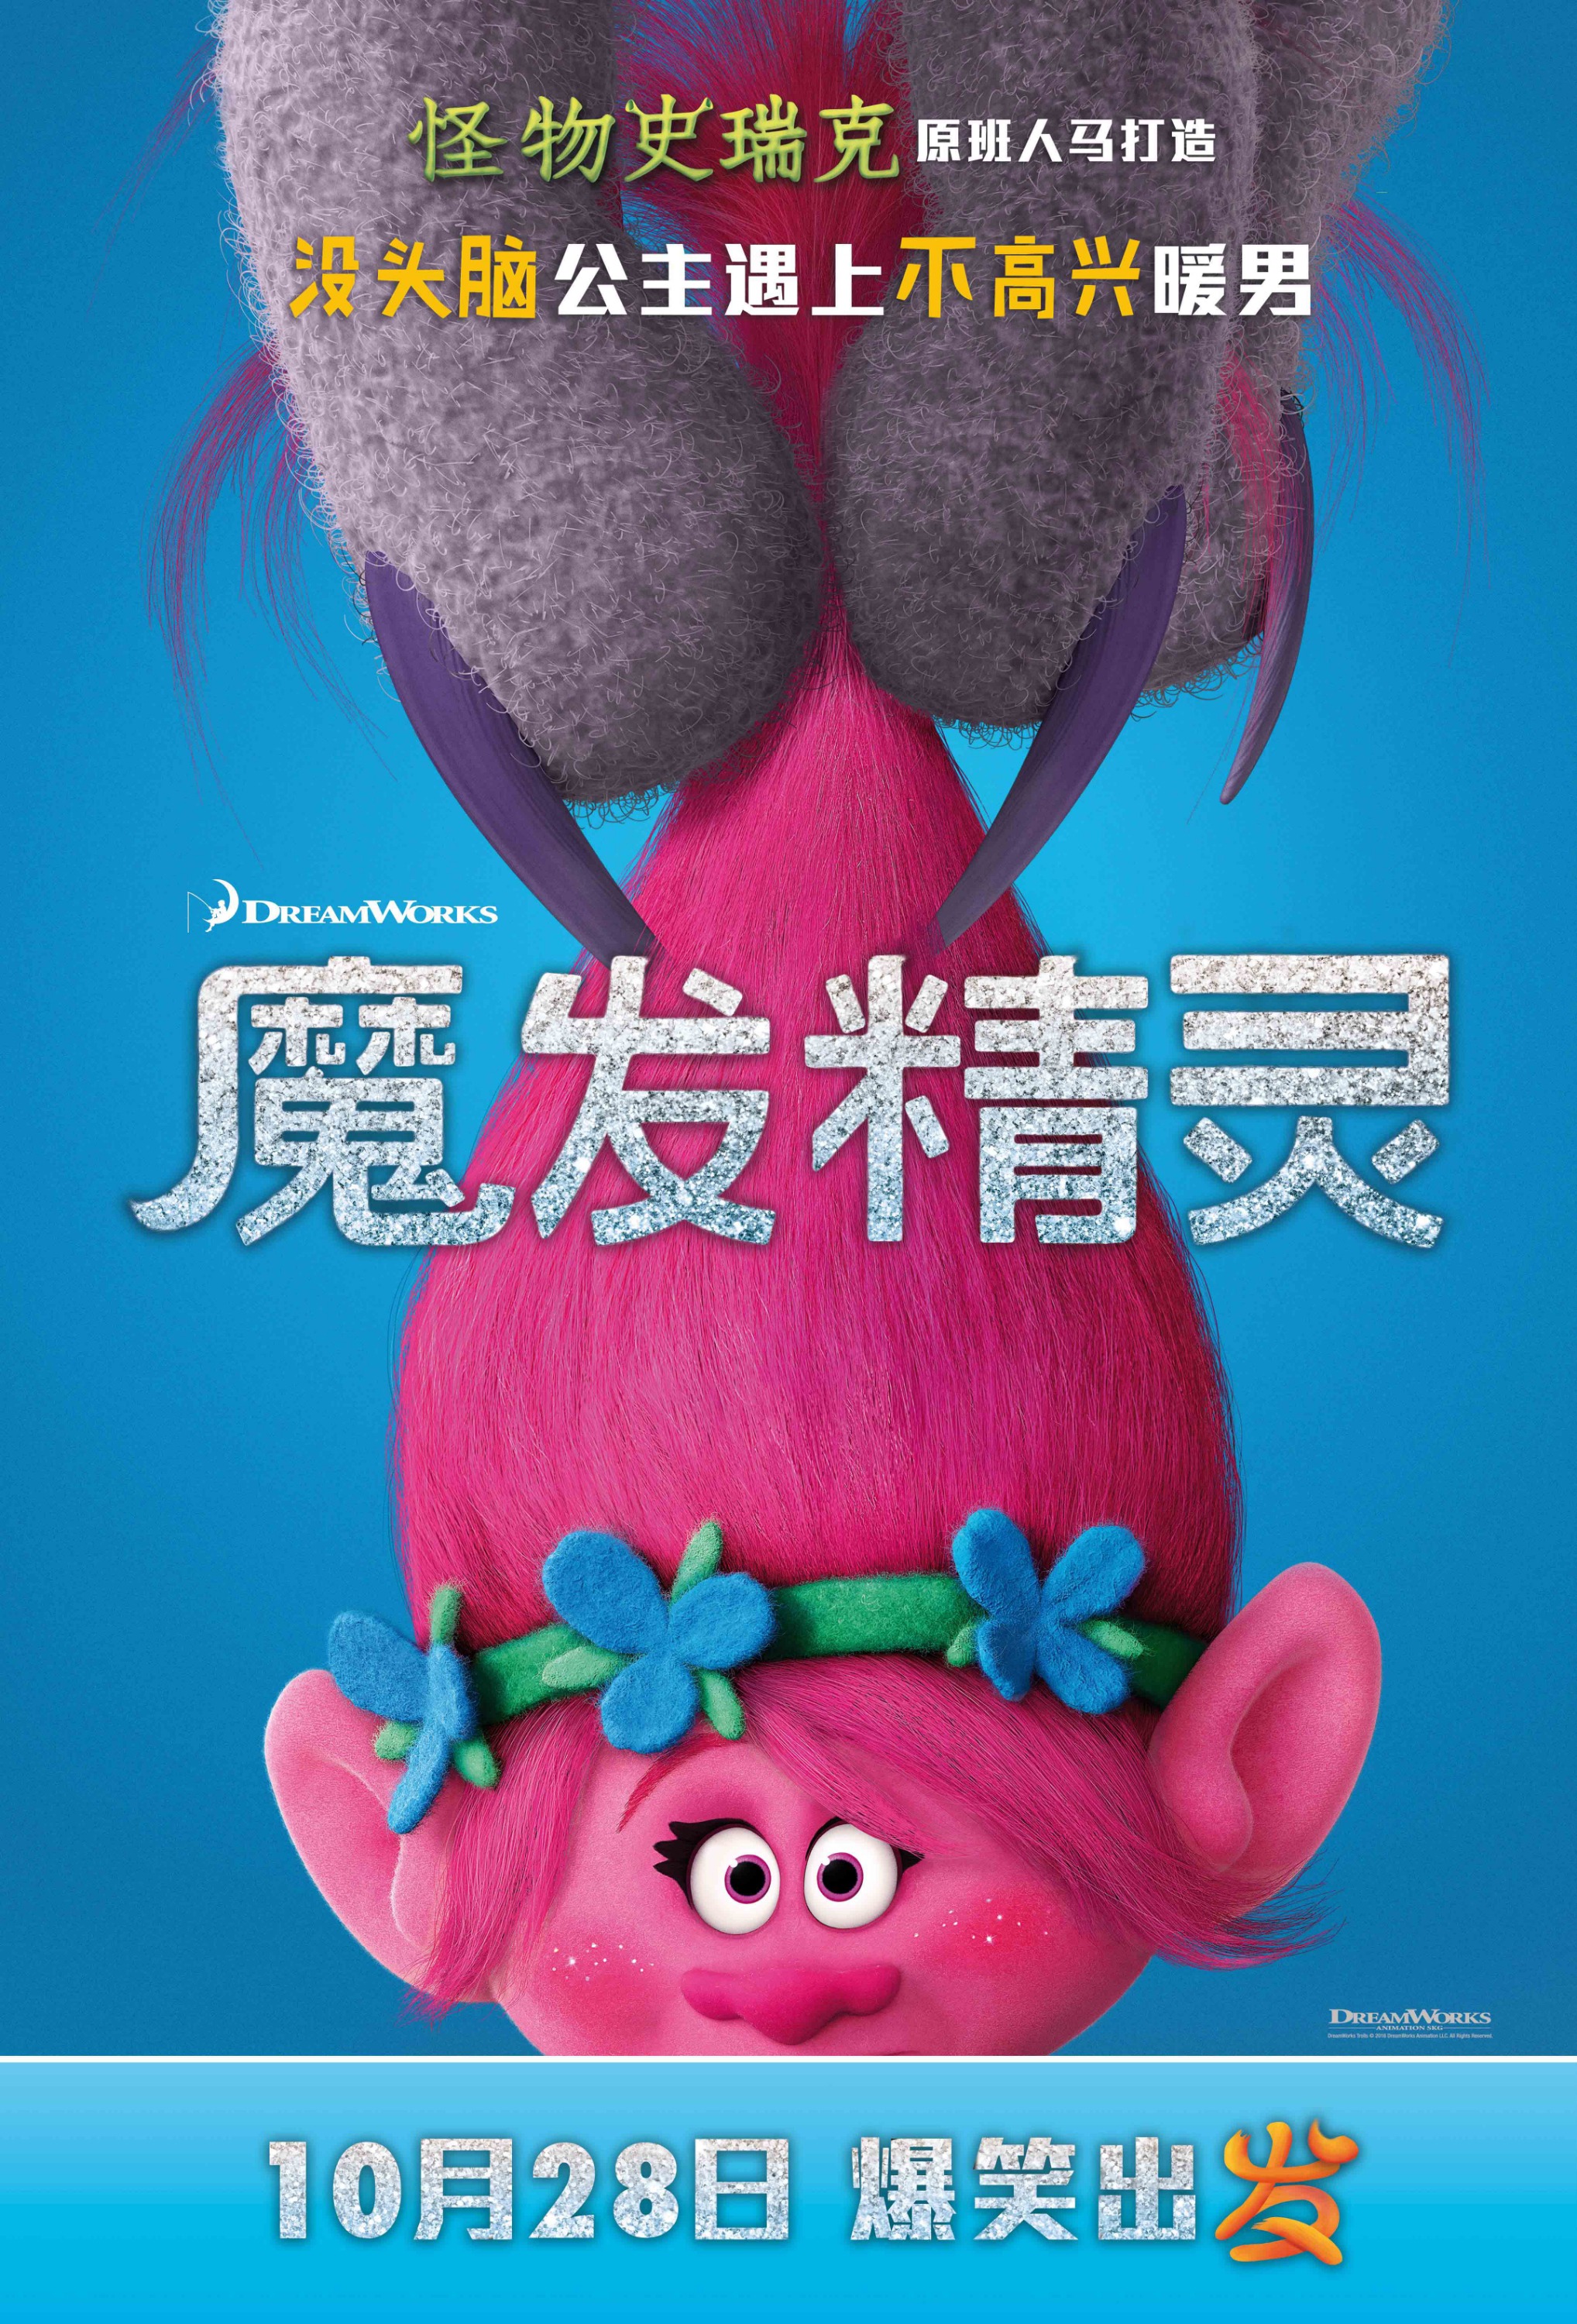 Mega Sized Movie Poster Image for Trolls (#14 of 20)